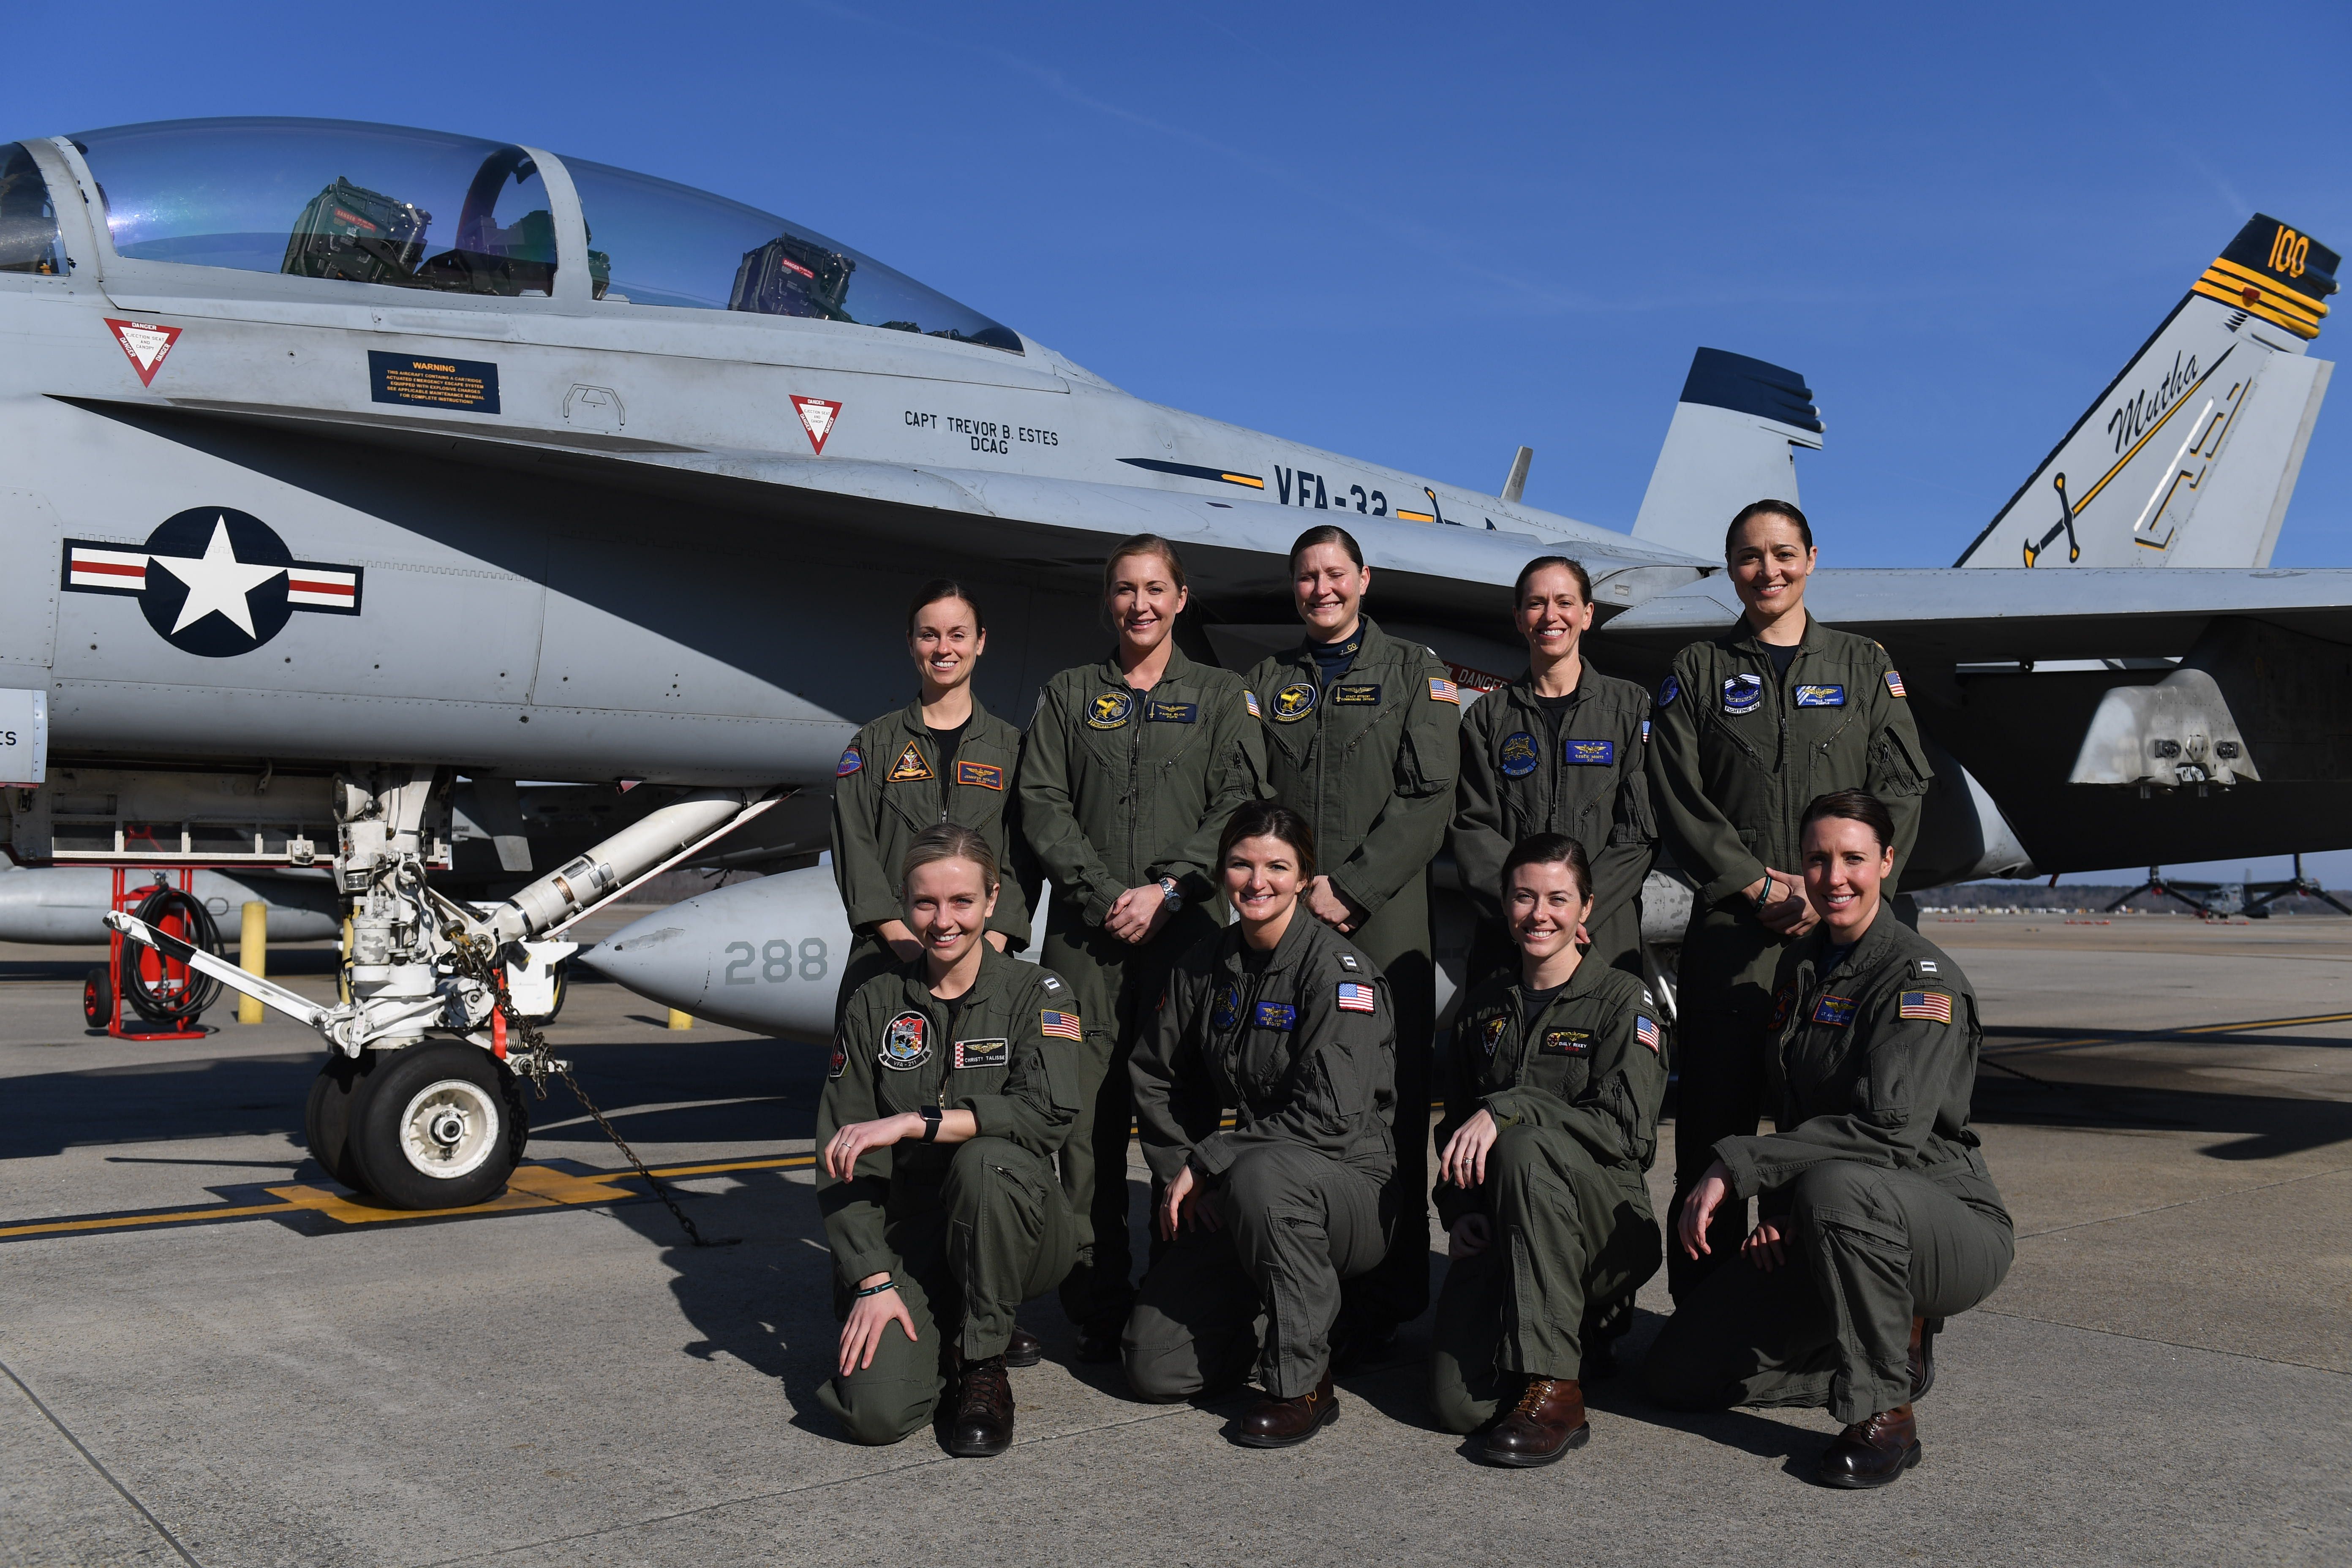 Women's Superspeed Bra in Navy/silver